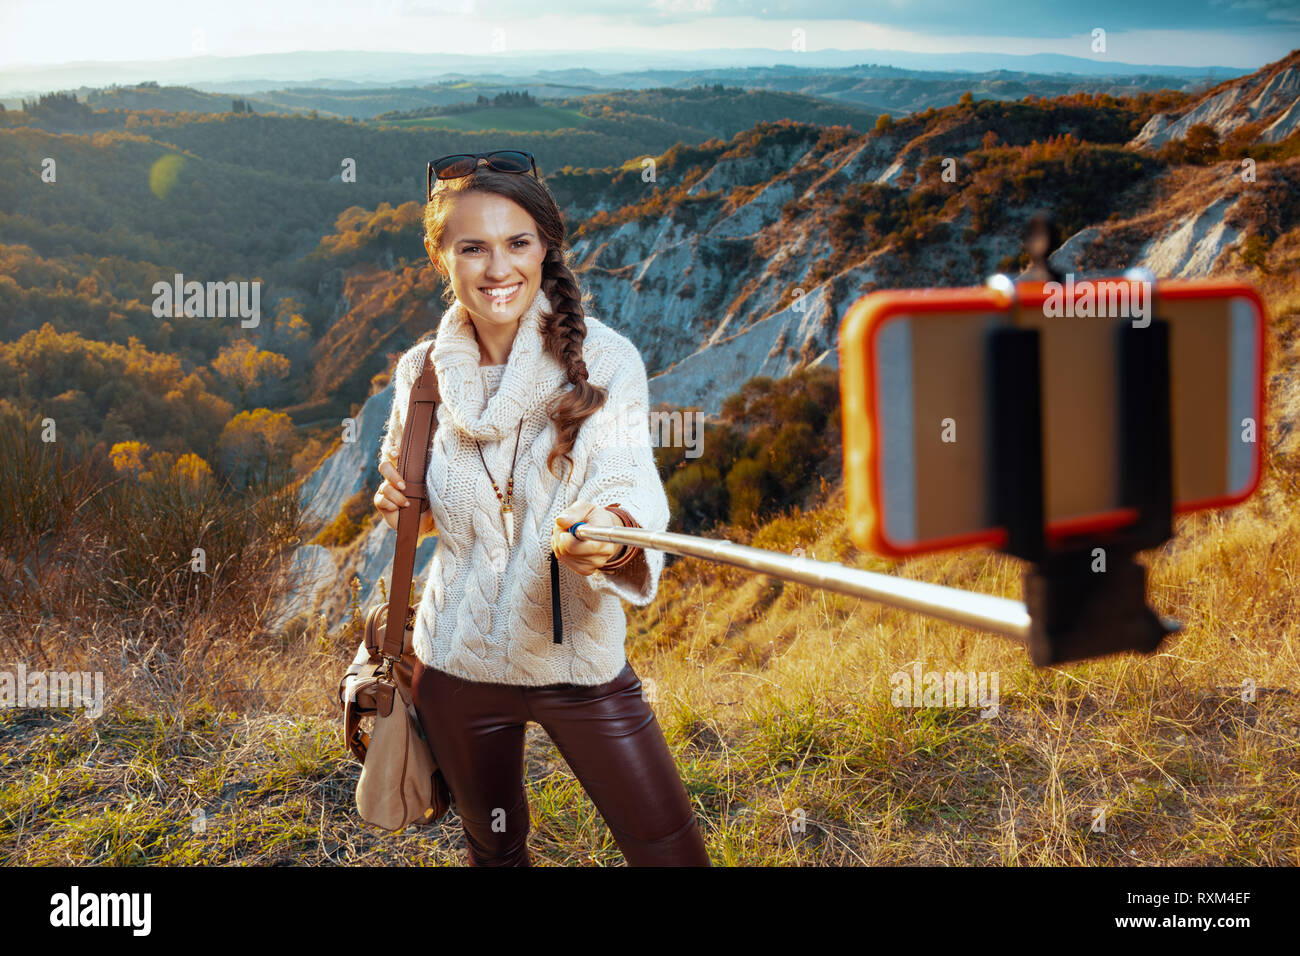 hiking selfie stick